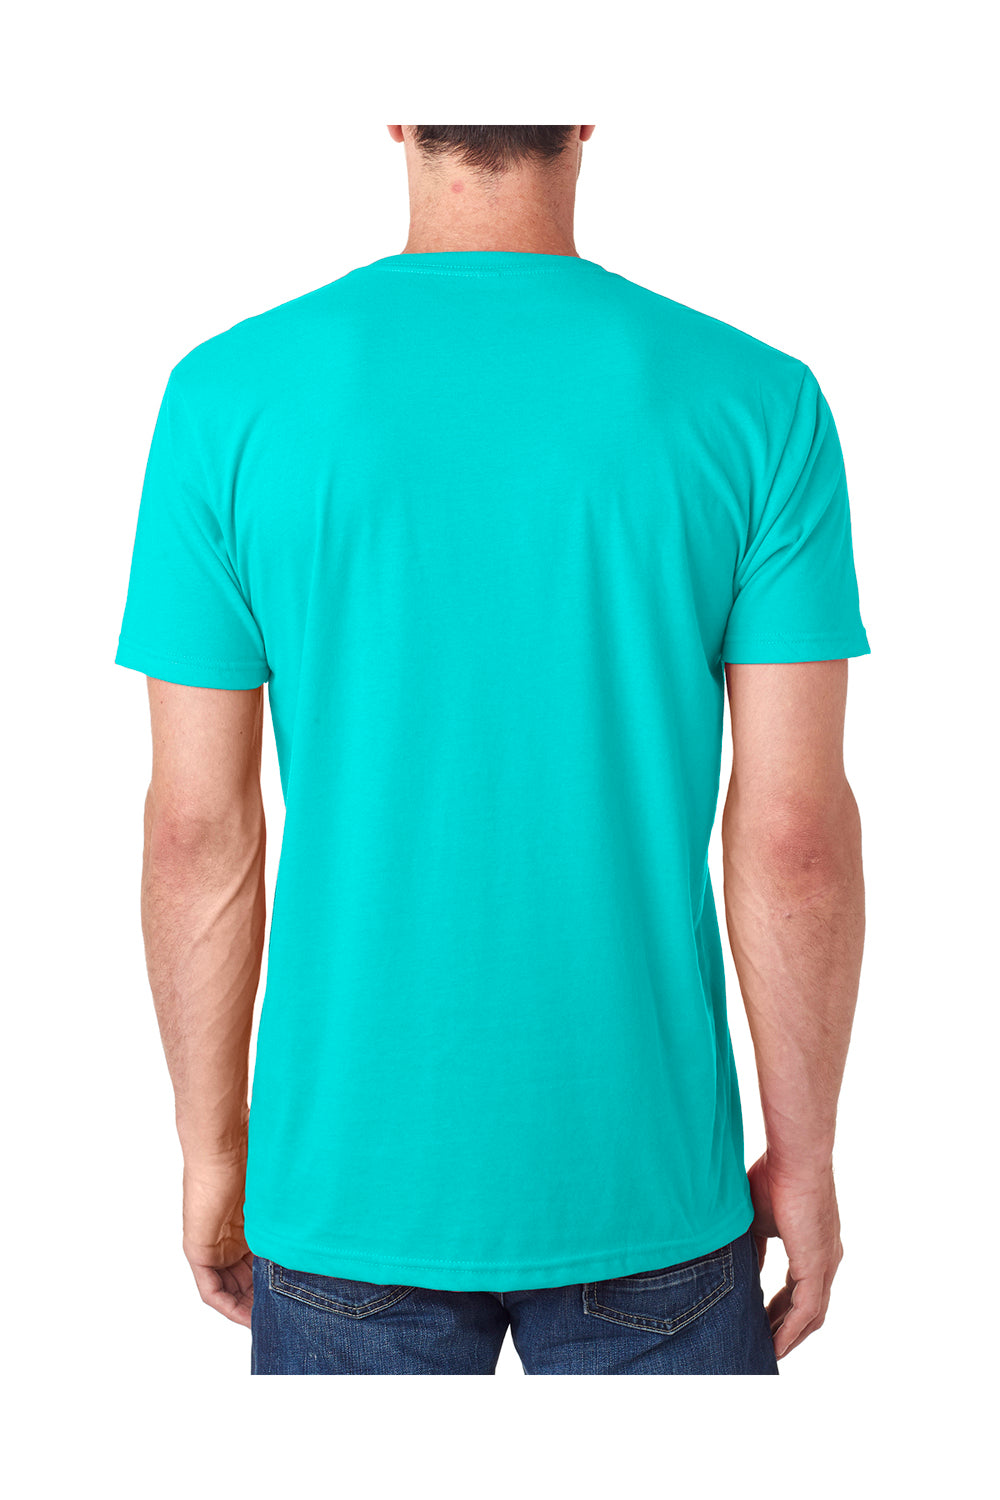 Next Level 6440 Mens Sueded Jersey Short Sleeve V-Neck T-Shirt Tahiti Blue Back